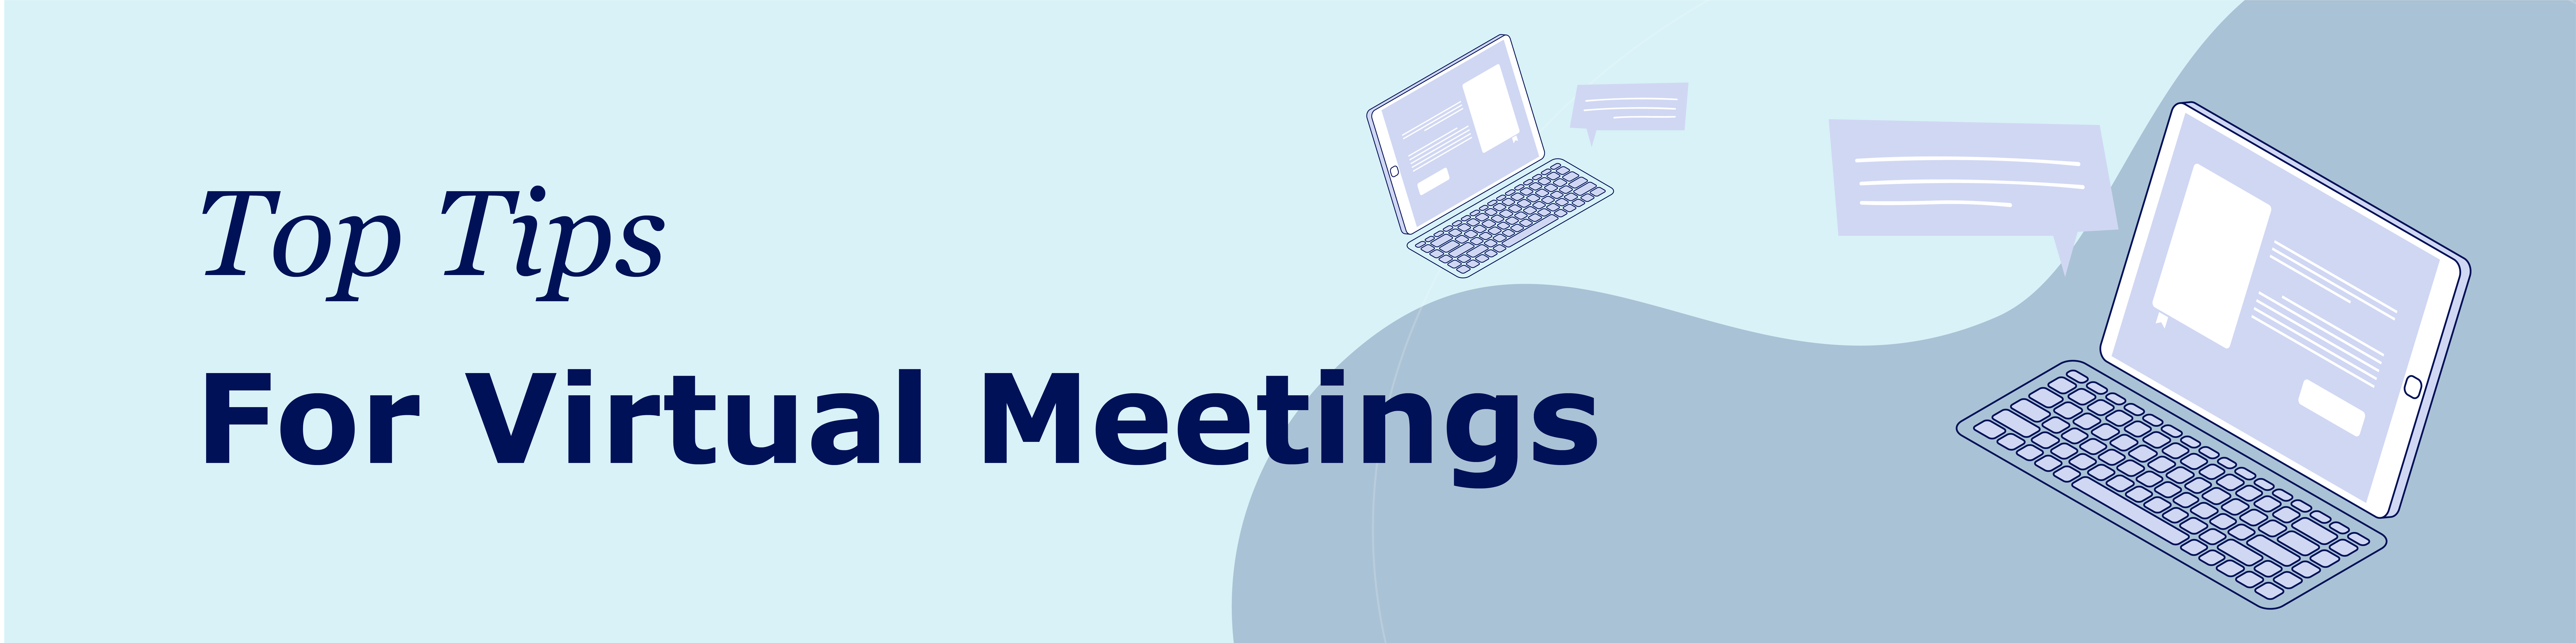 Top Tips for Virtual Meetings